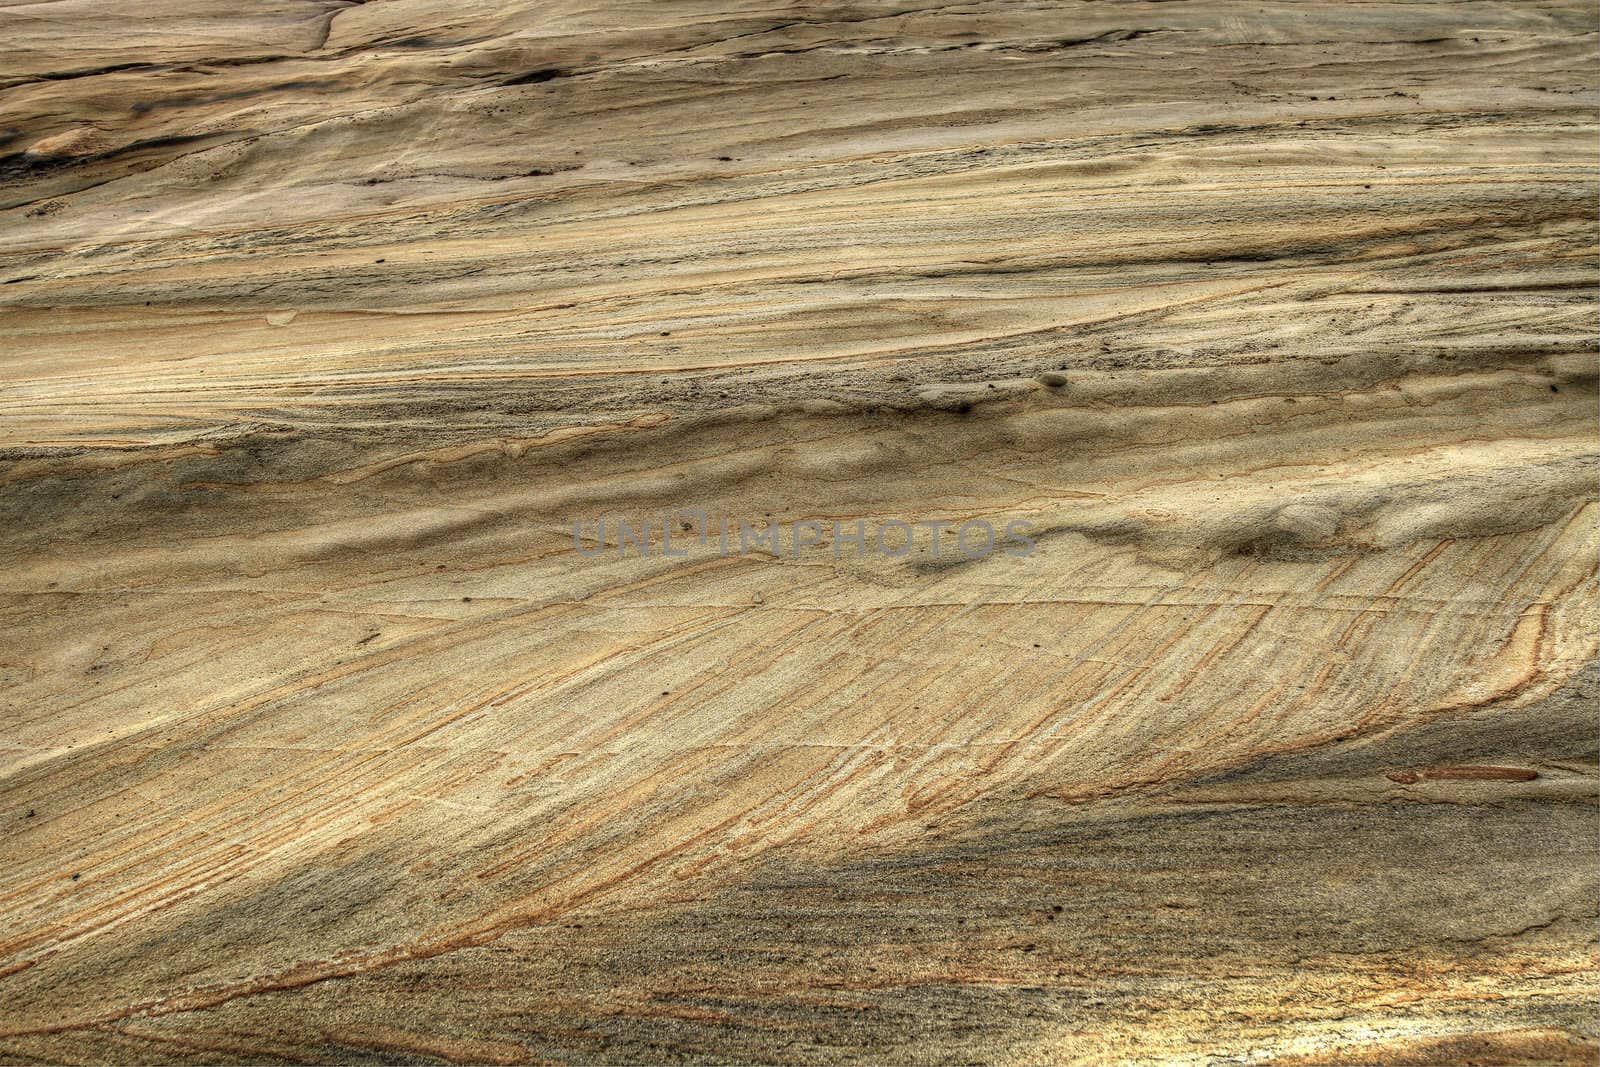 Sandstone Rock Texture at Cape Kiwanda Cliff